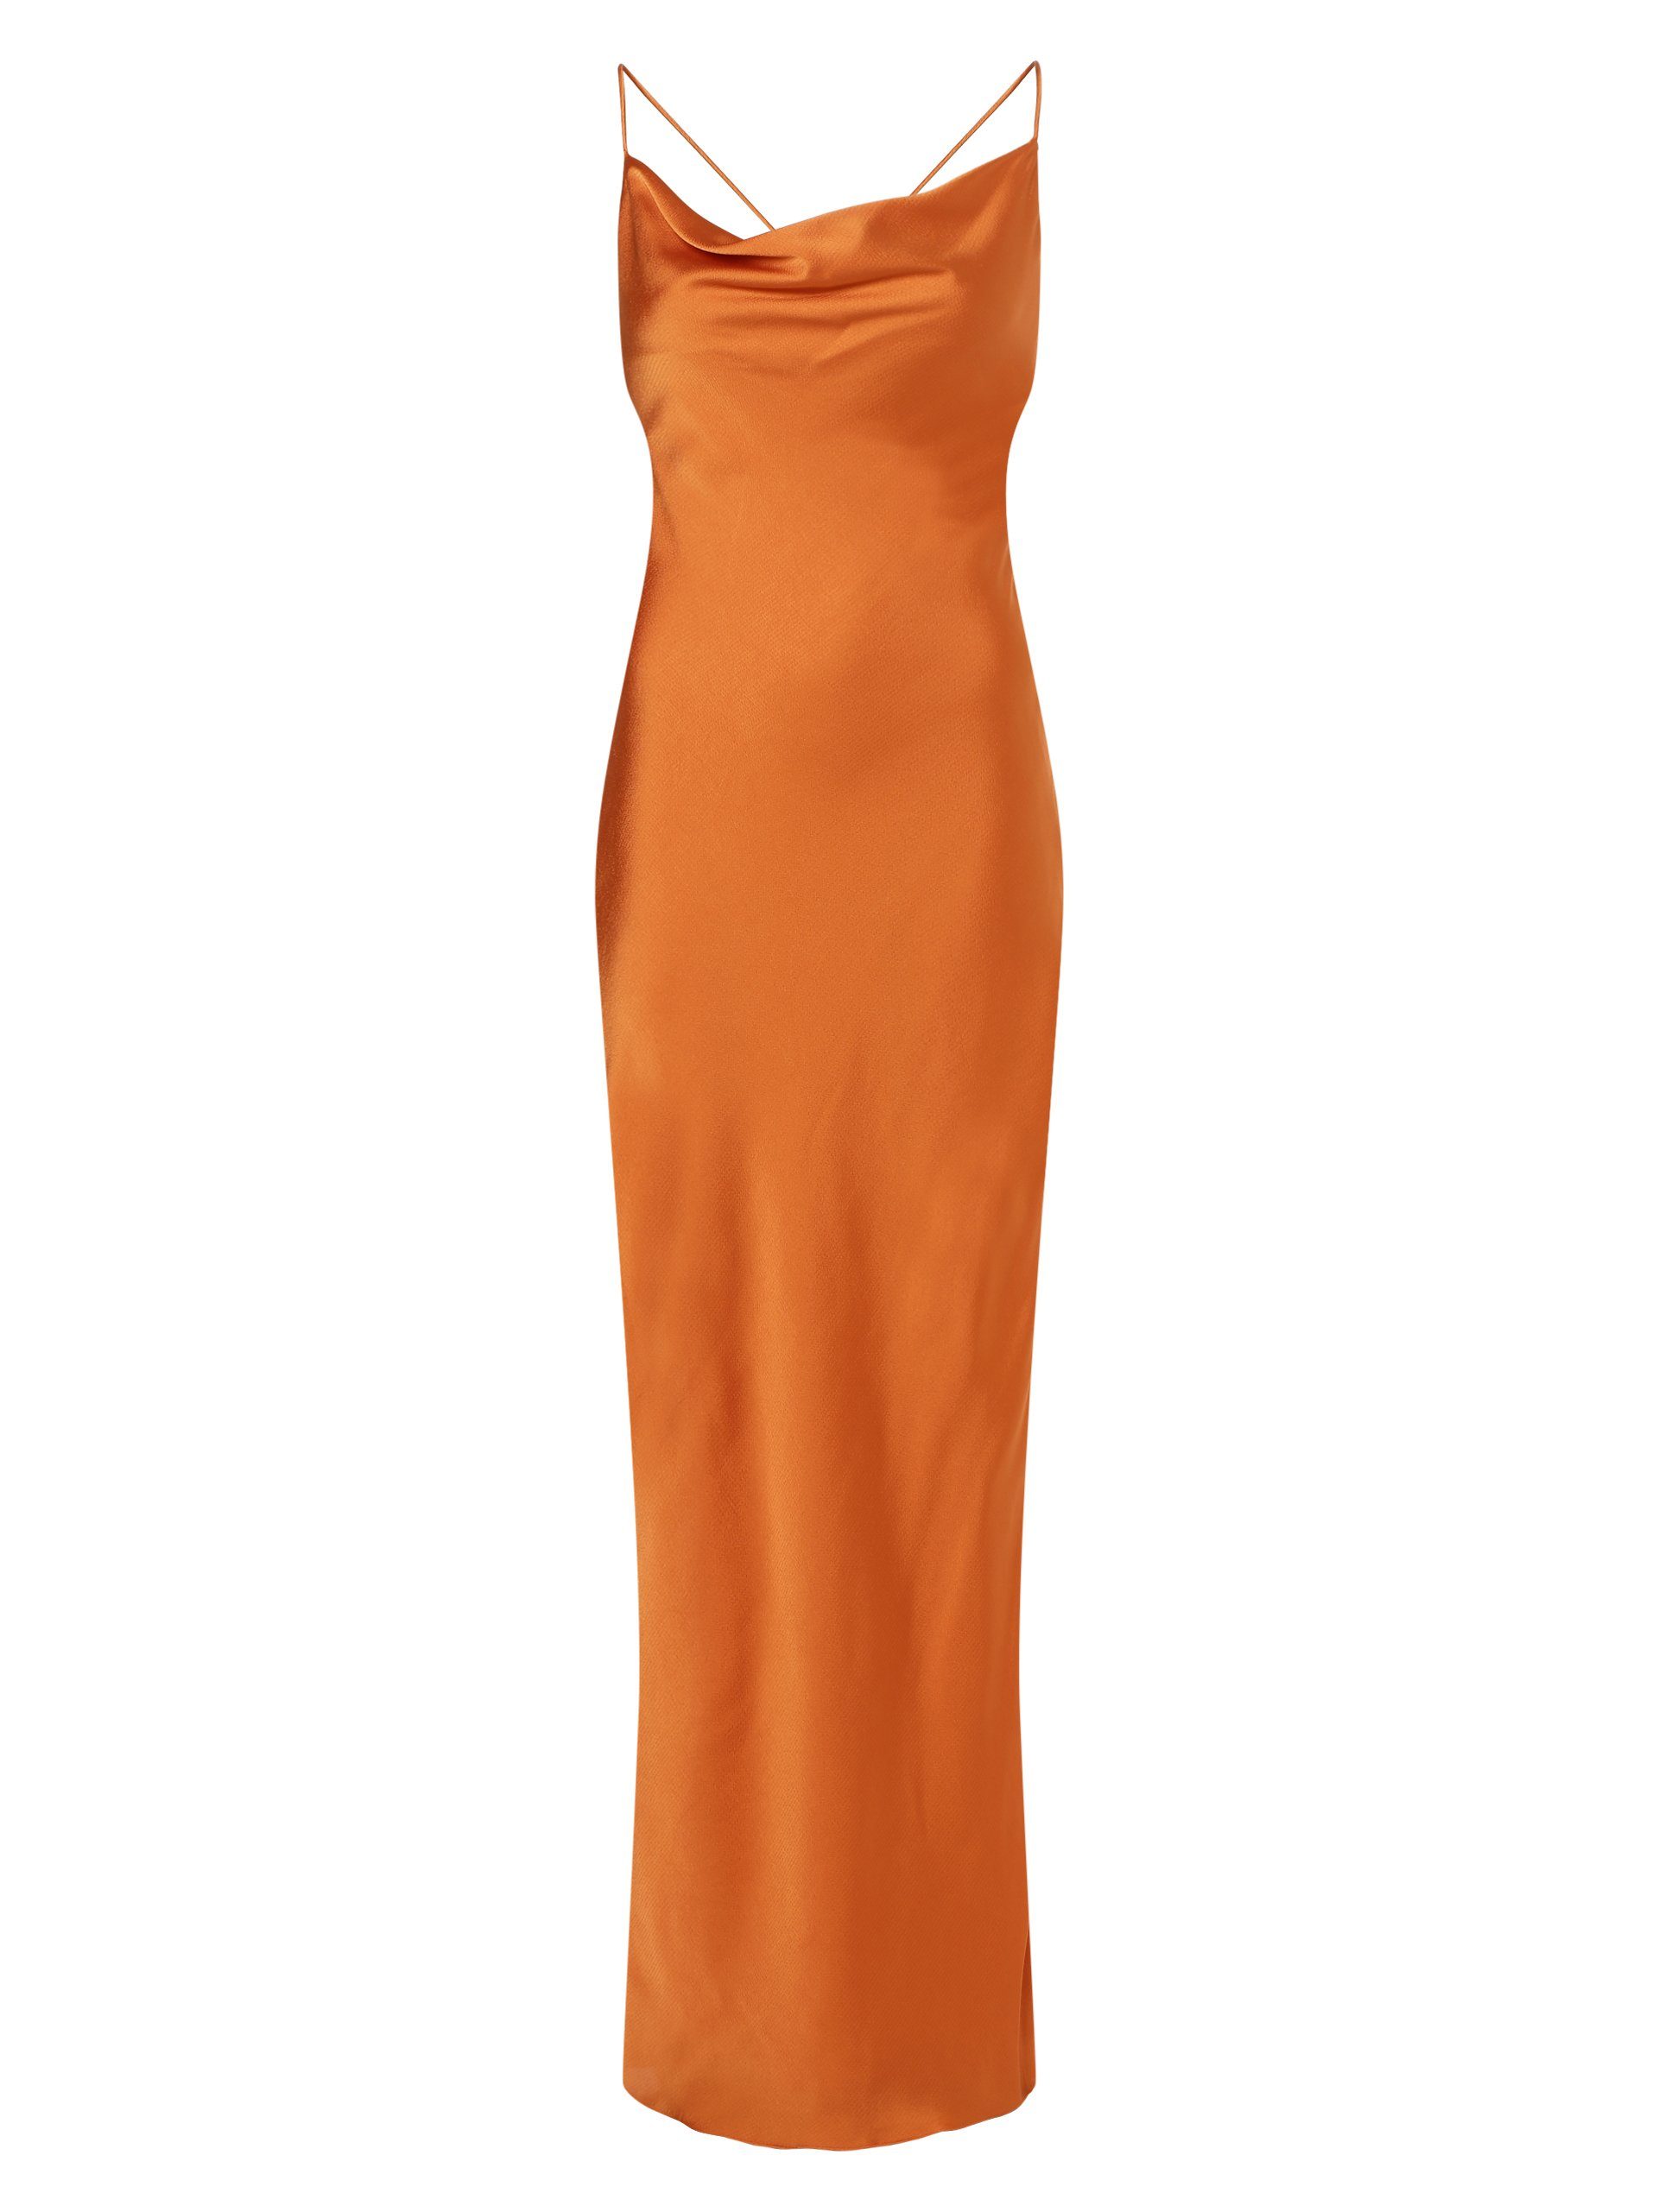 Unique Abendkleid orange | Abendkleider